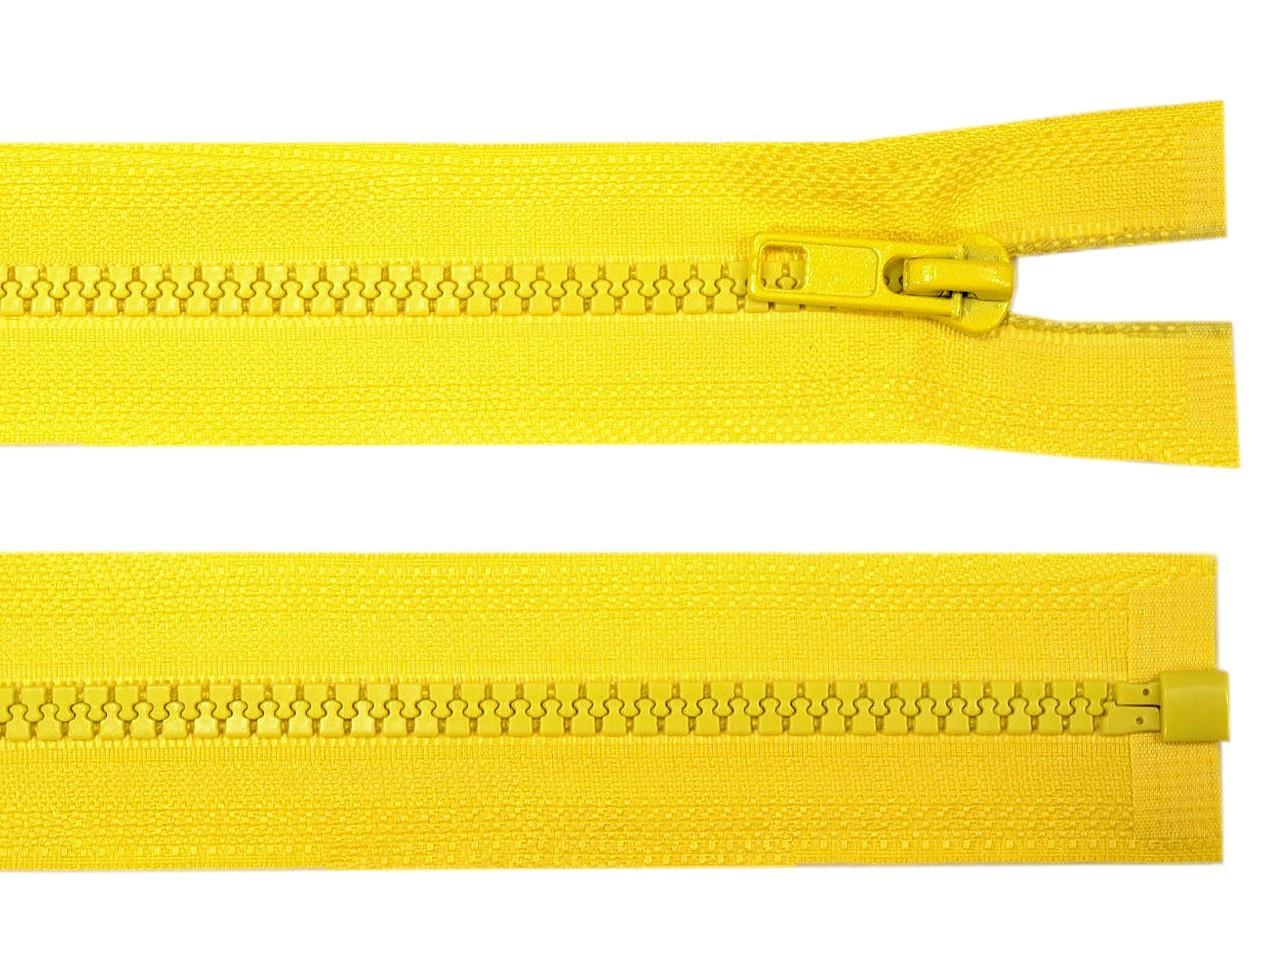 Kostěný zip No 5 délka 85 cm bundový, barva 110 žlutá